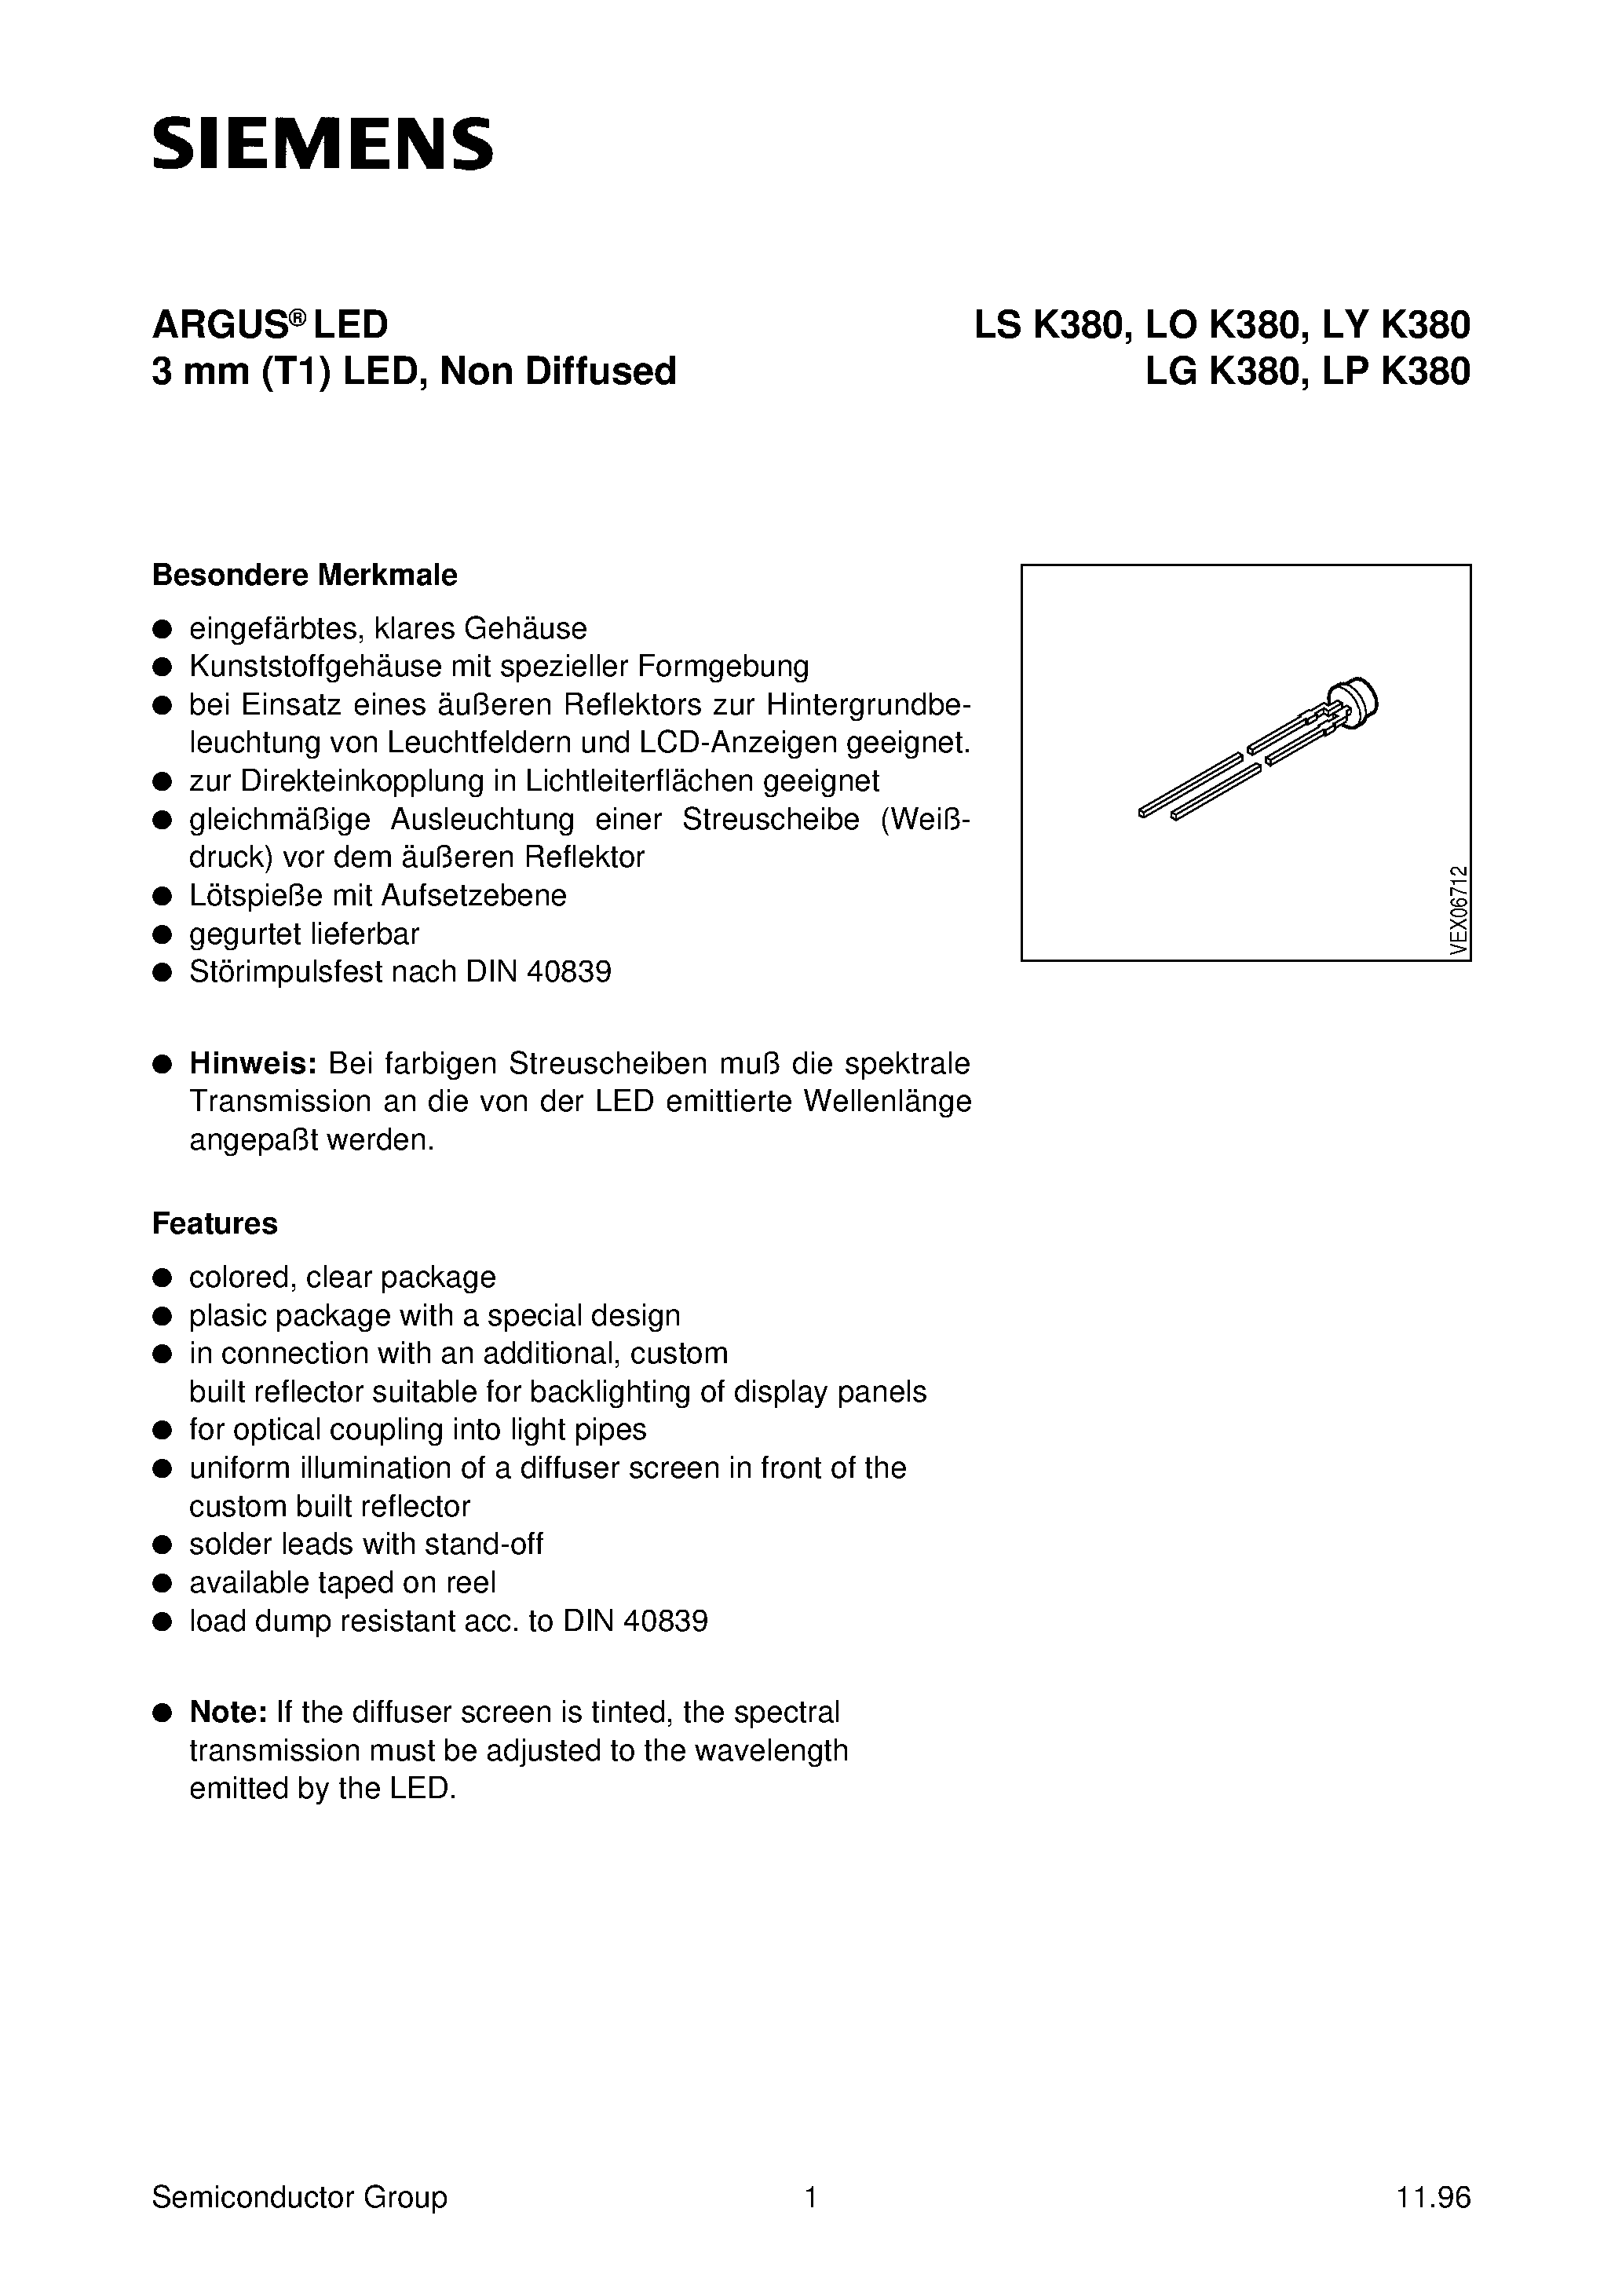 Datasheet LYK380-Q - ARGUS LED 3 mm T1 LED/ Non Diffused page 1